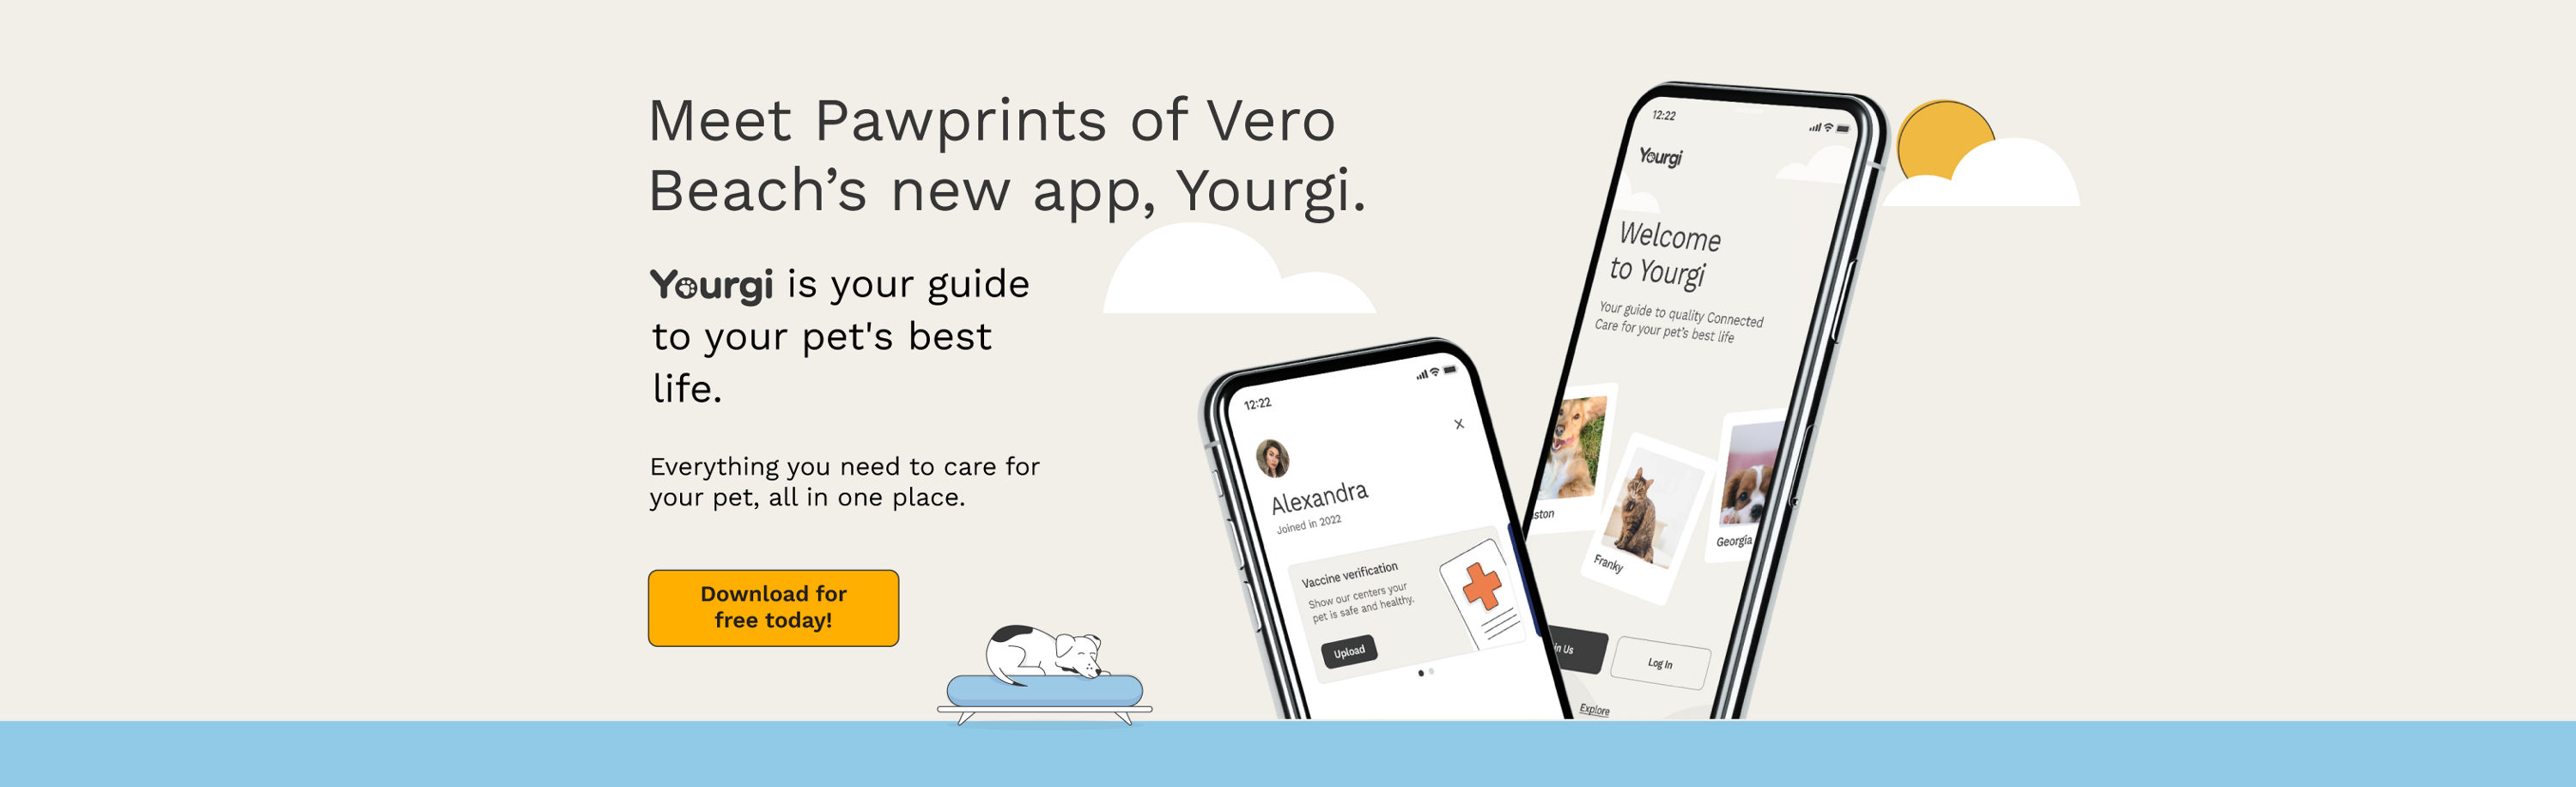 Meet Pawprints of Vero Beach's new app, Yourgi.